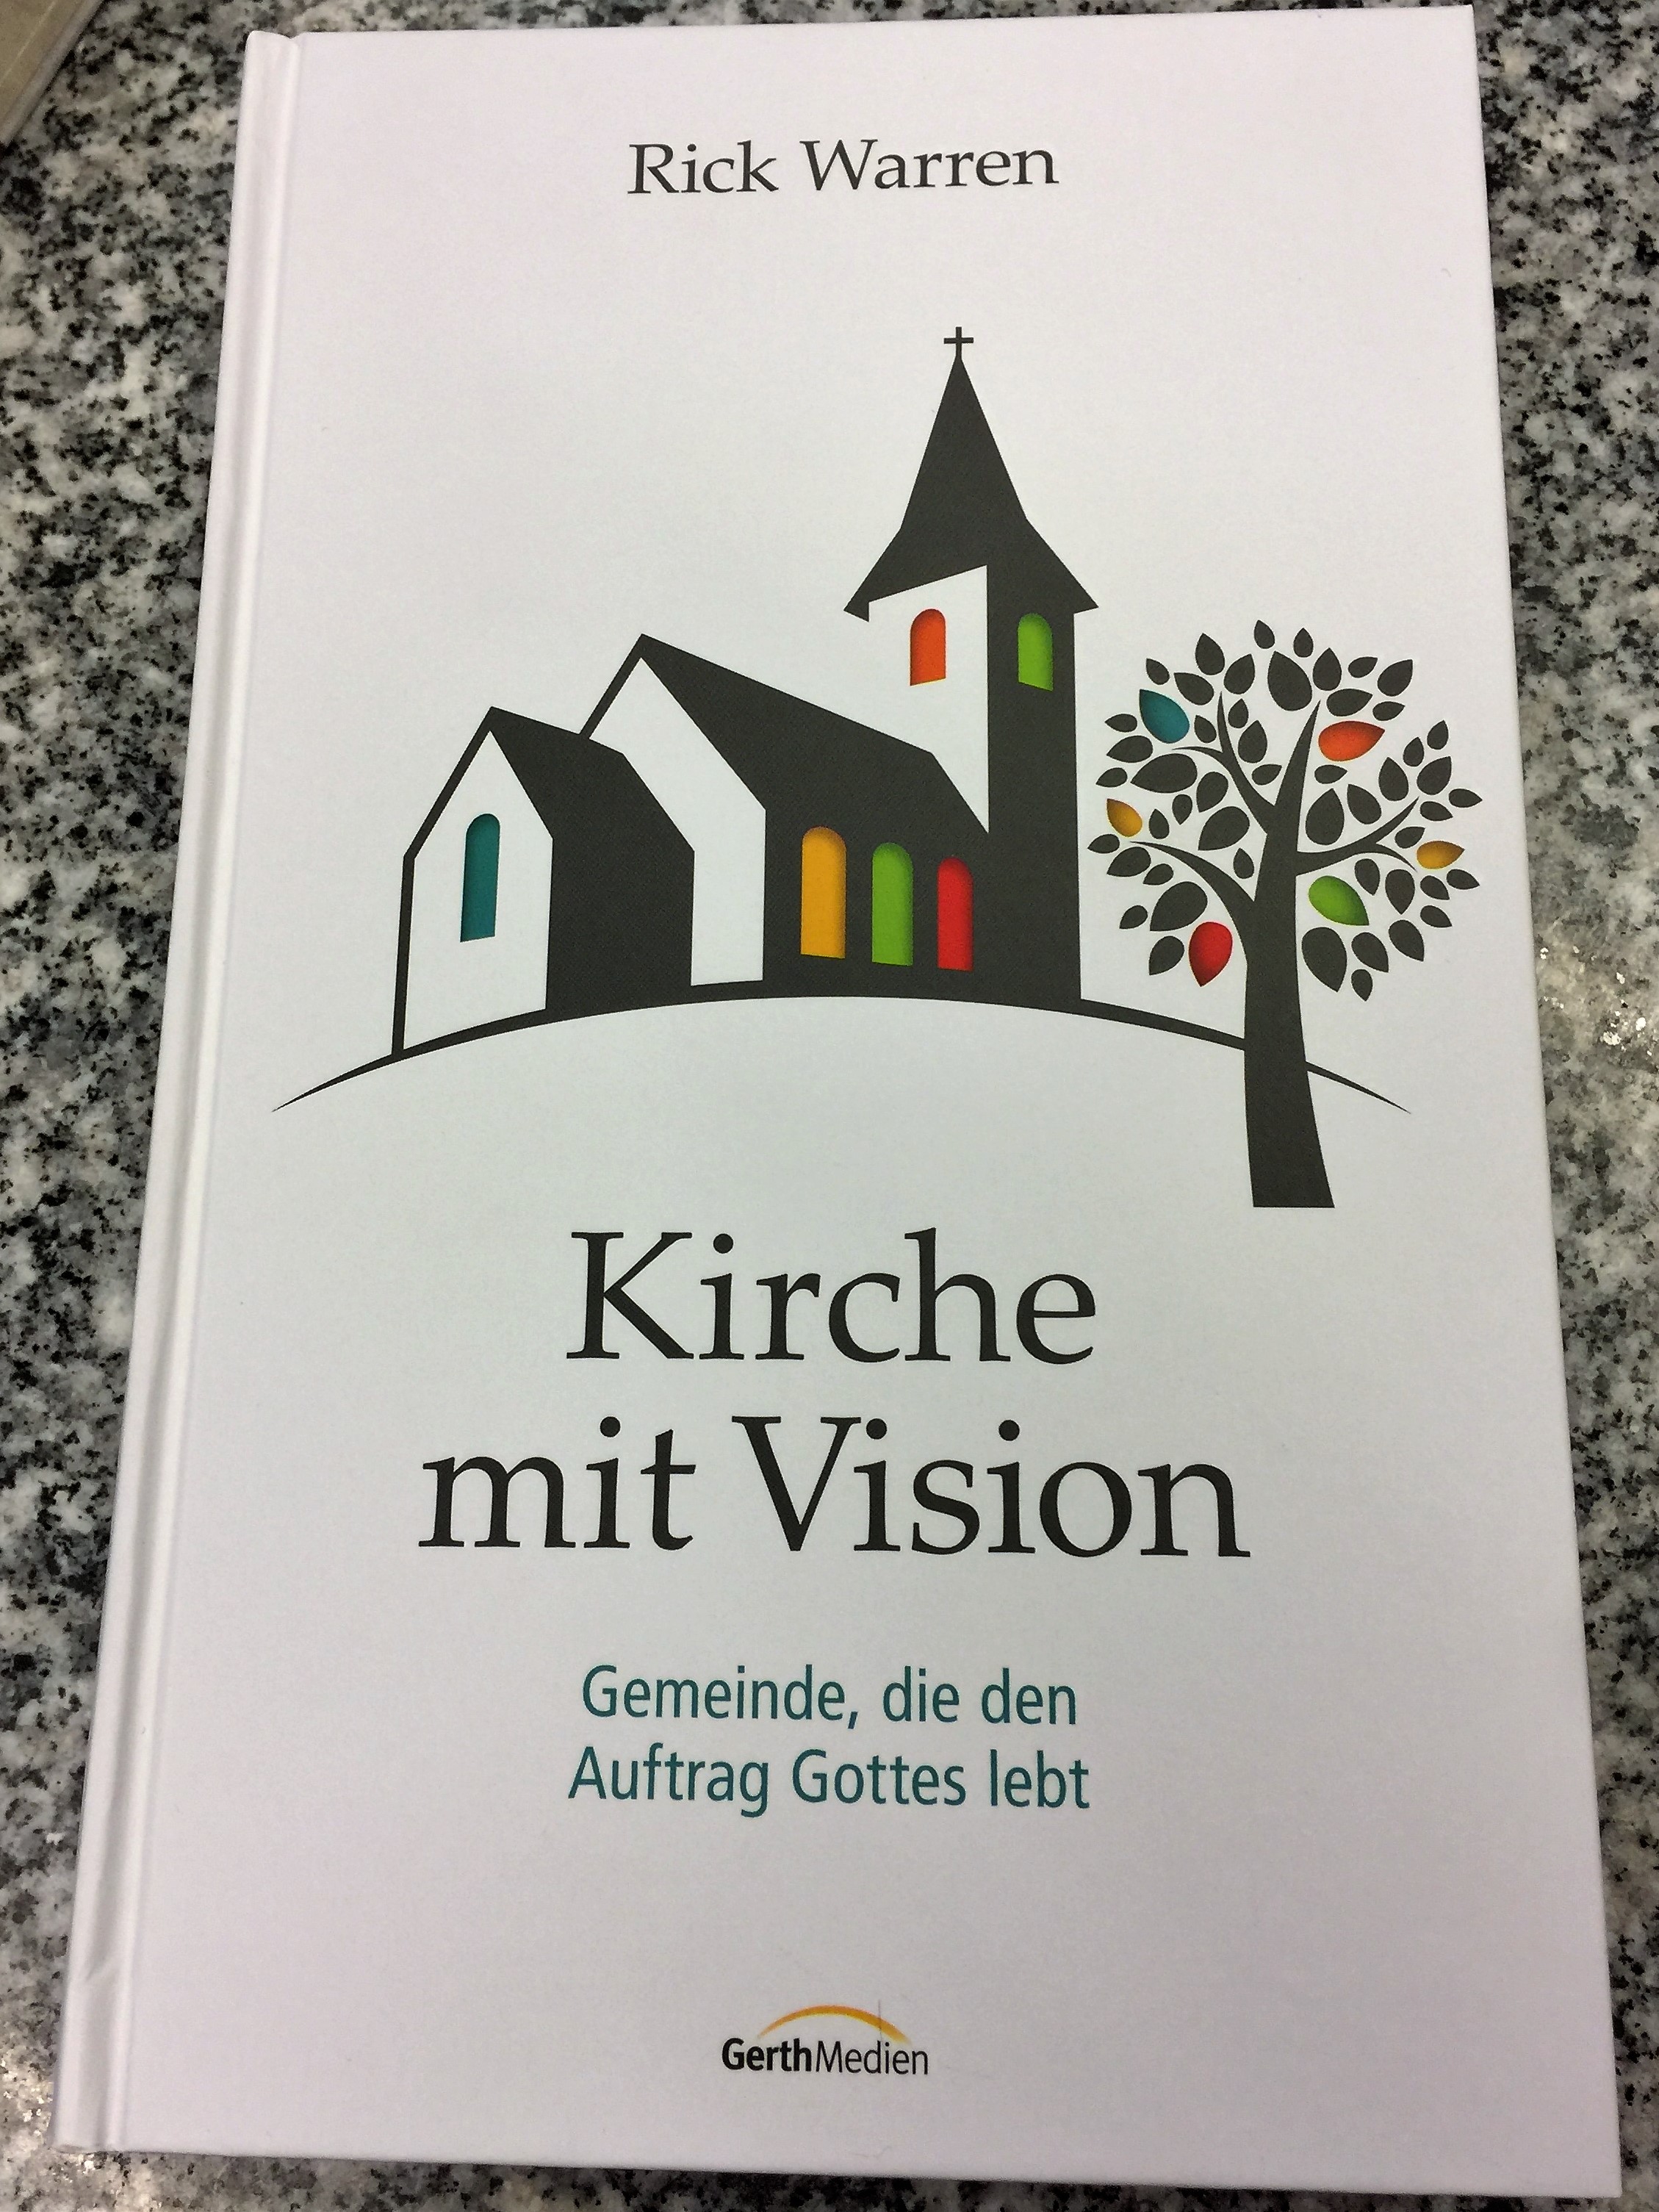 kirche-mit-vision-by-rick-warren-german-edition-of-purpose-driven-church-hardcover-gerthmedien-2016-1st-edition-1-.jpg